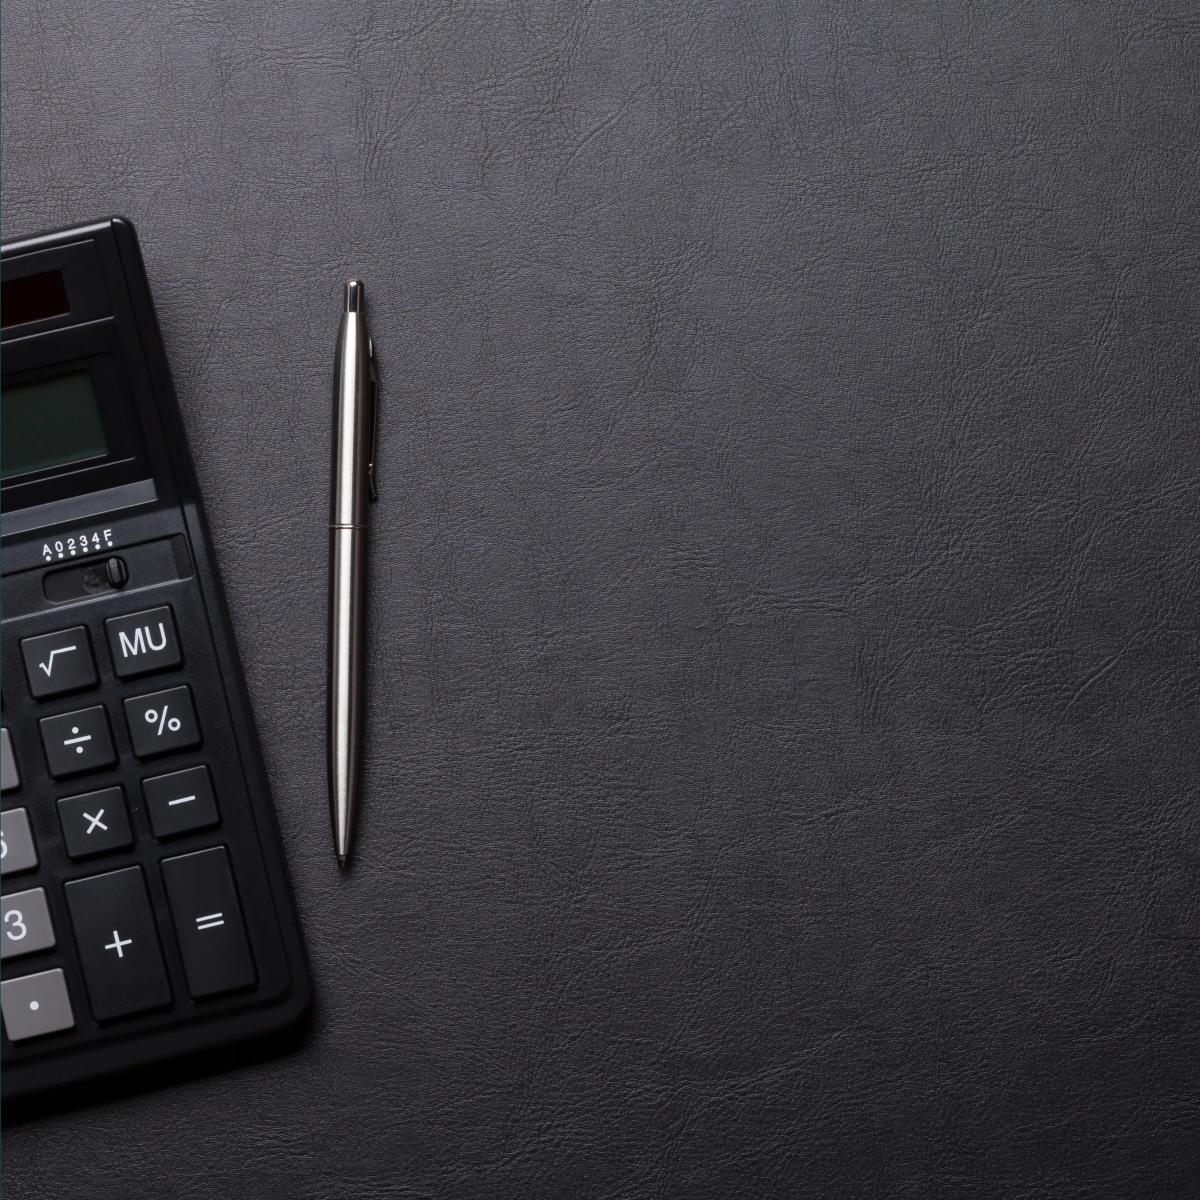 Dark photo of calculator and pen